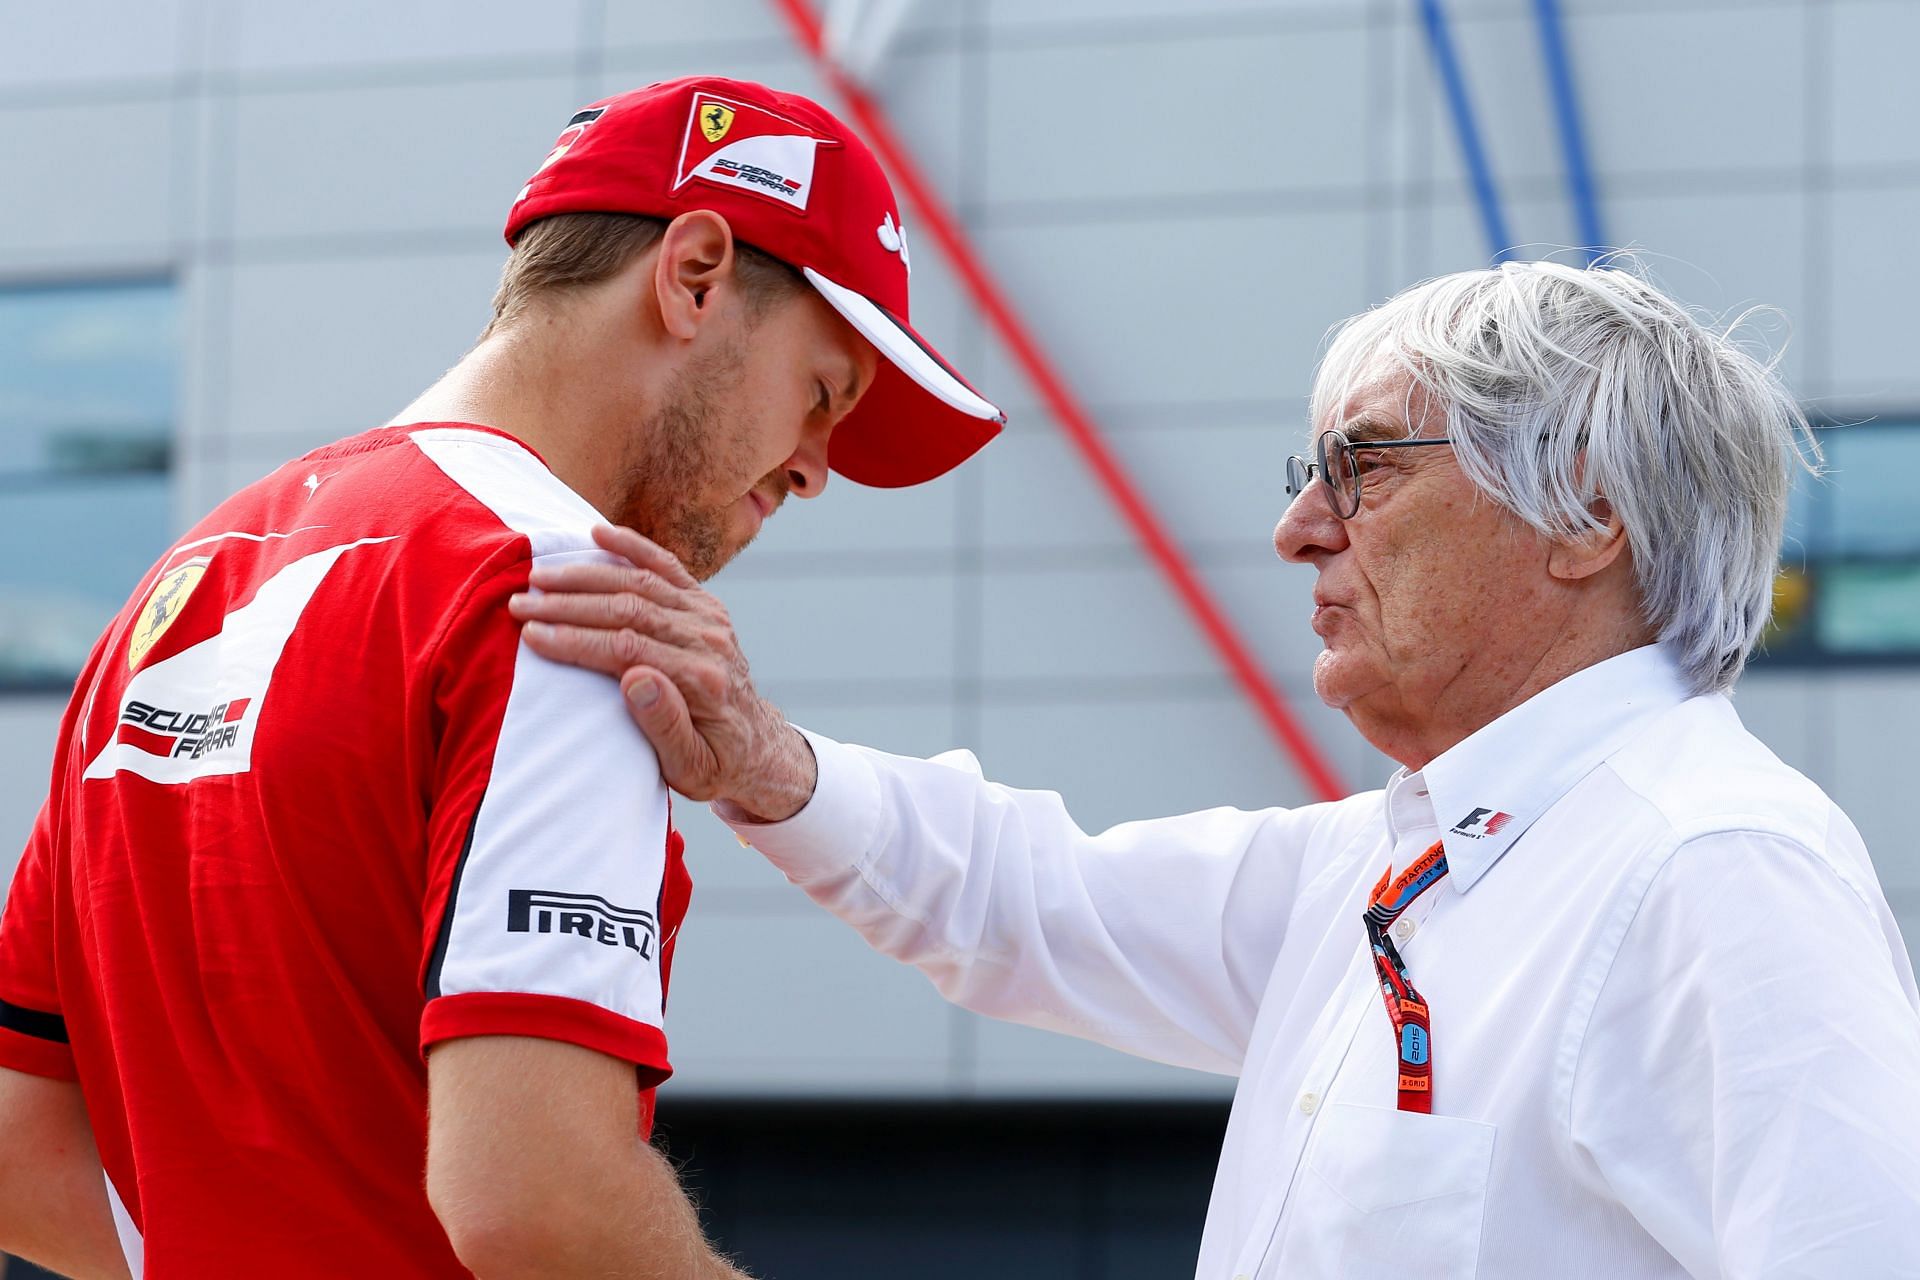 Bernie Ecclestone and Sebastian Vettel at the 2018 British Grand Prix